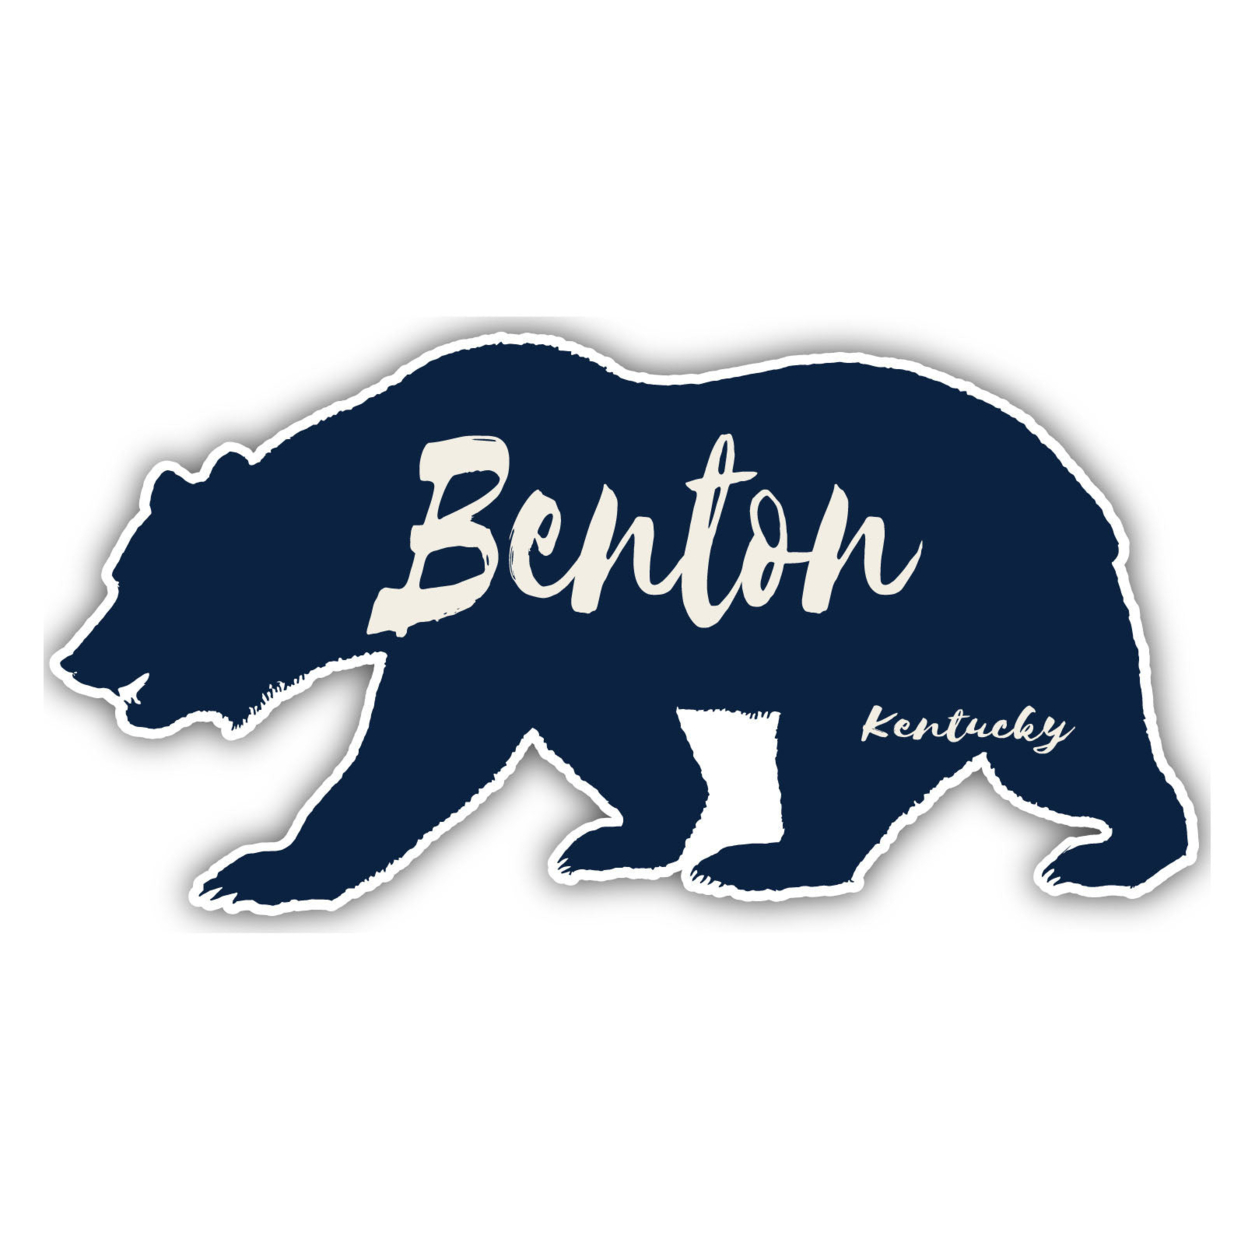 Benton Kentucky Souvenir Decorative Stickers (Choose Theme And Size) - 4-Pack, 4-Inch, Bear